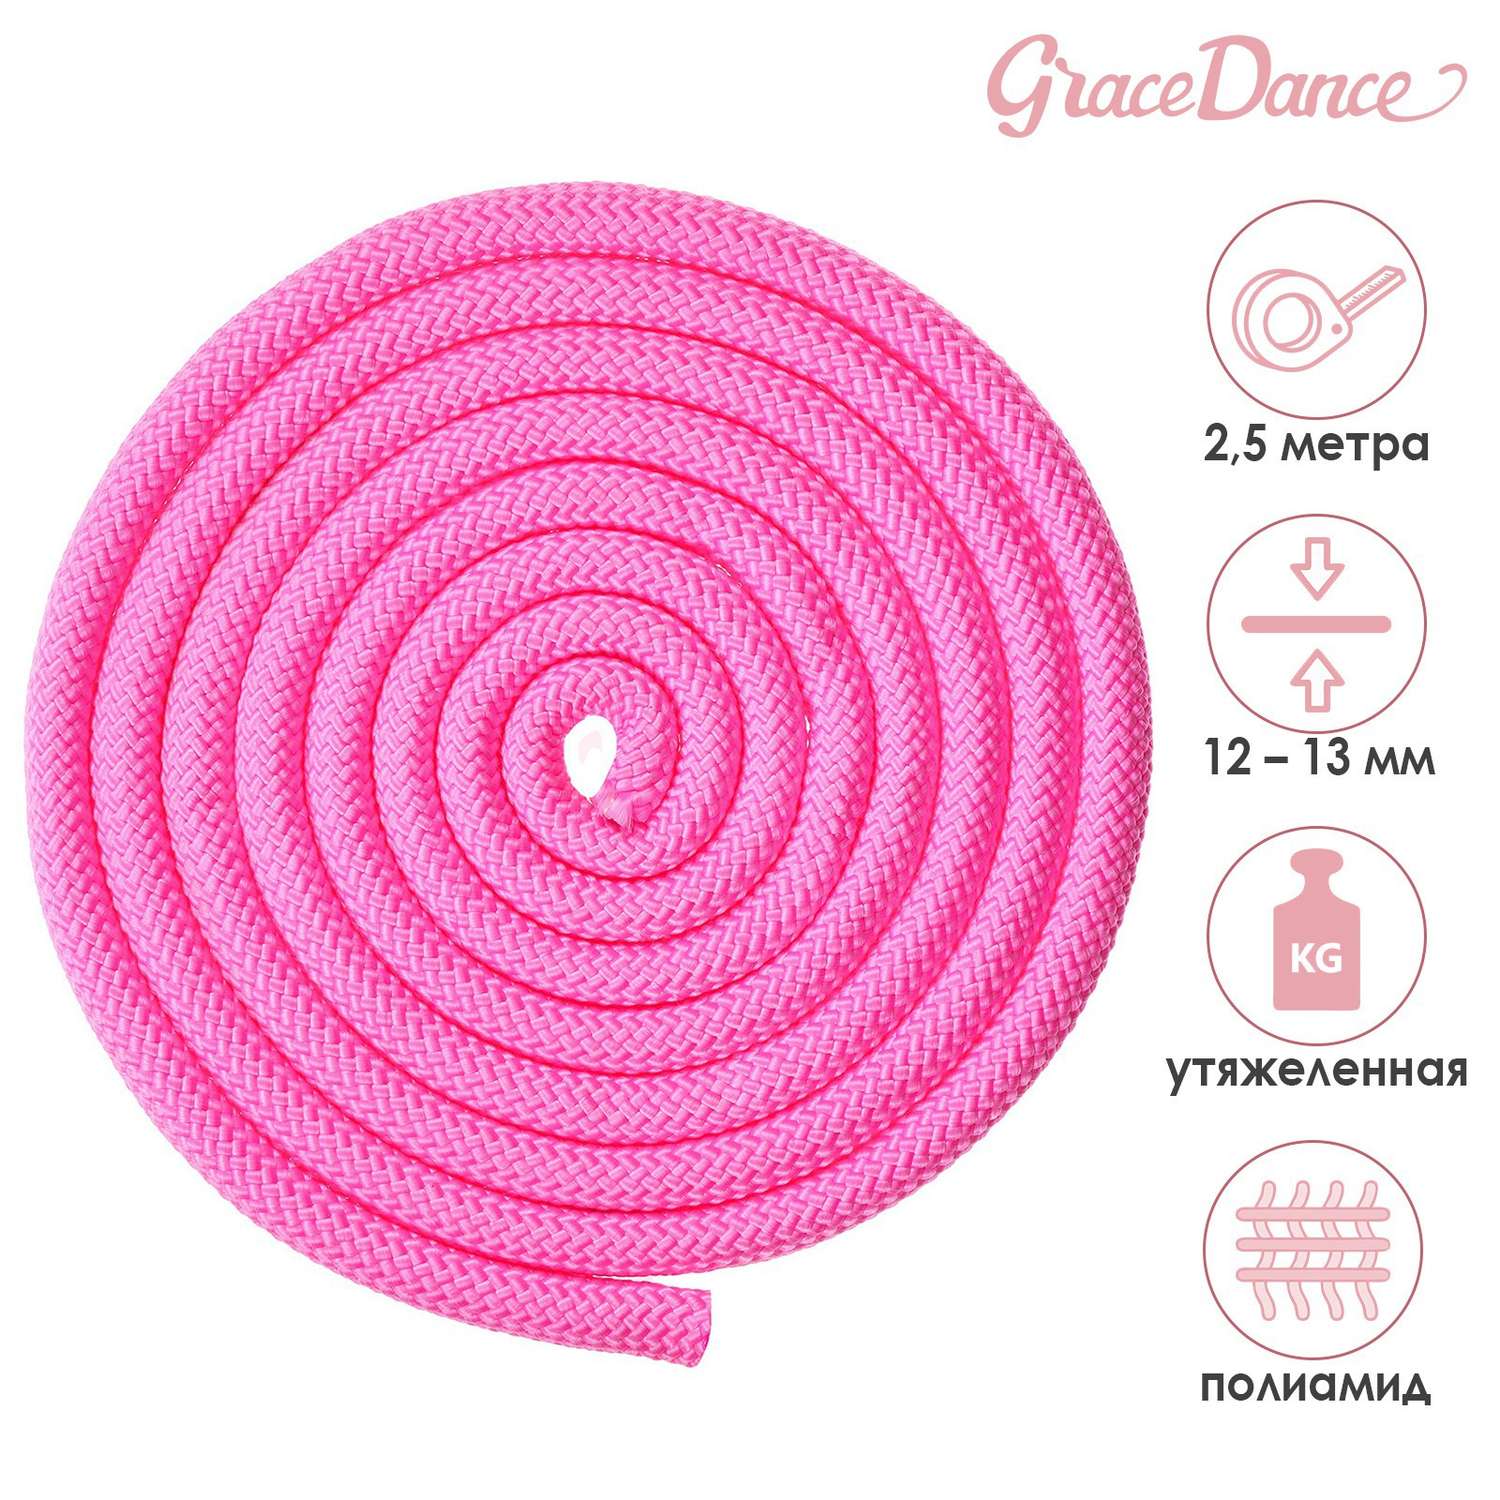 Скакалка Grace Dance 2.5 м. 150 г. цвет неон розовый - фото 1